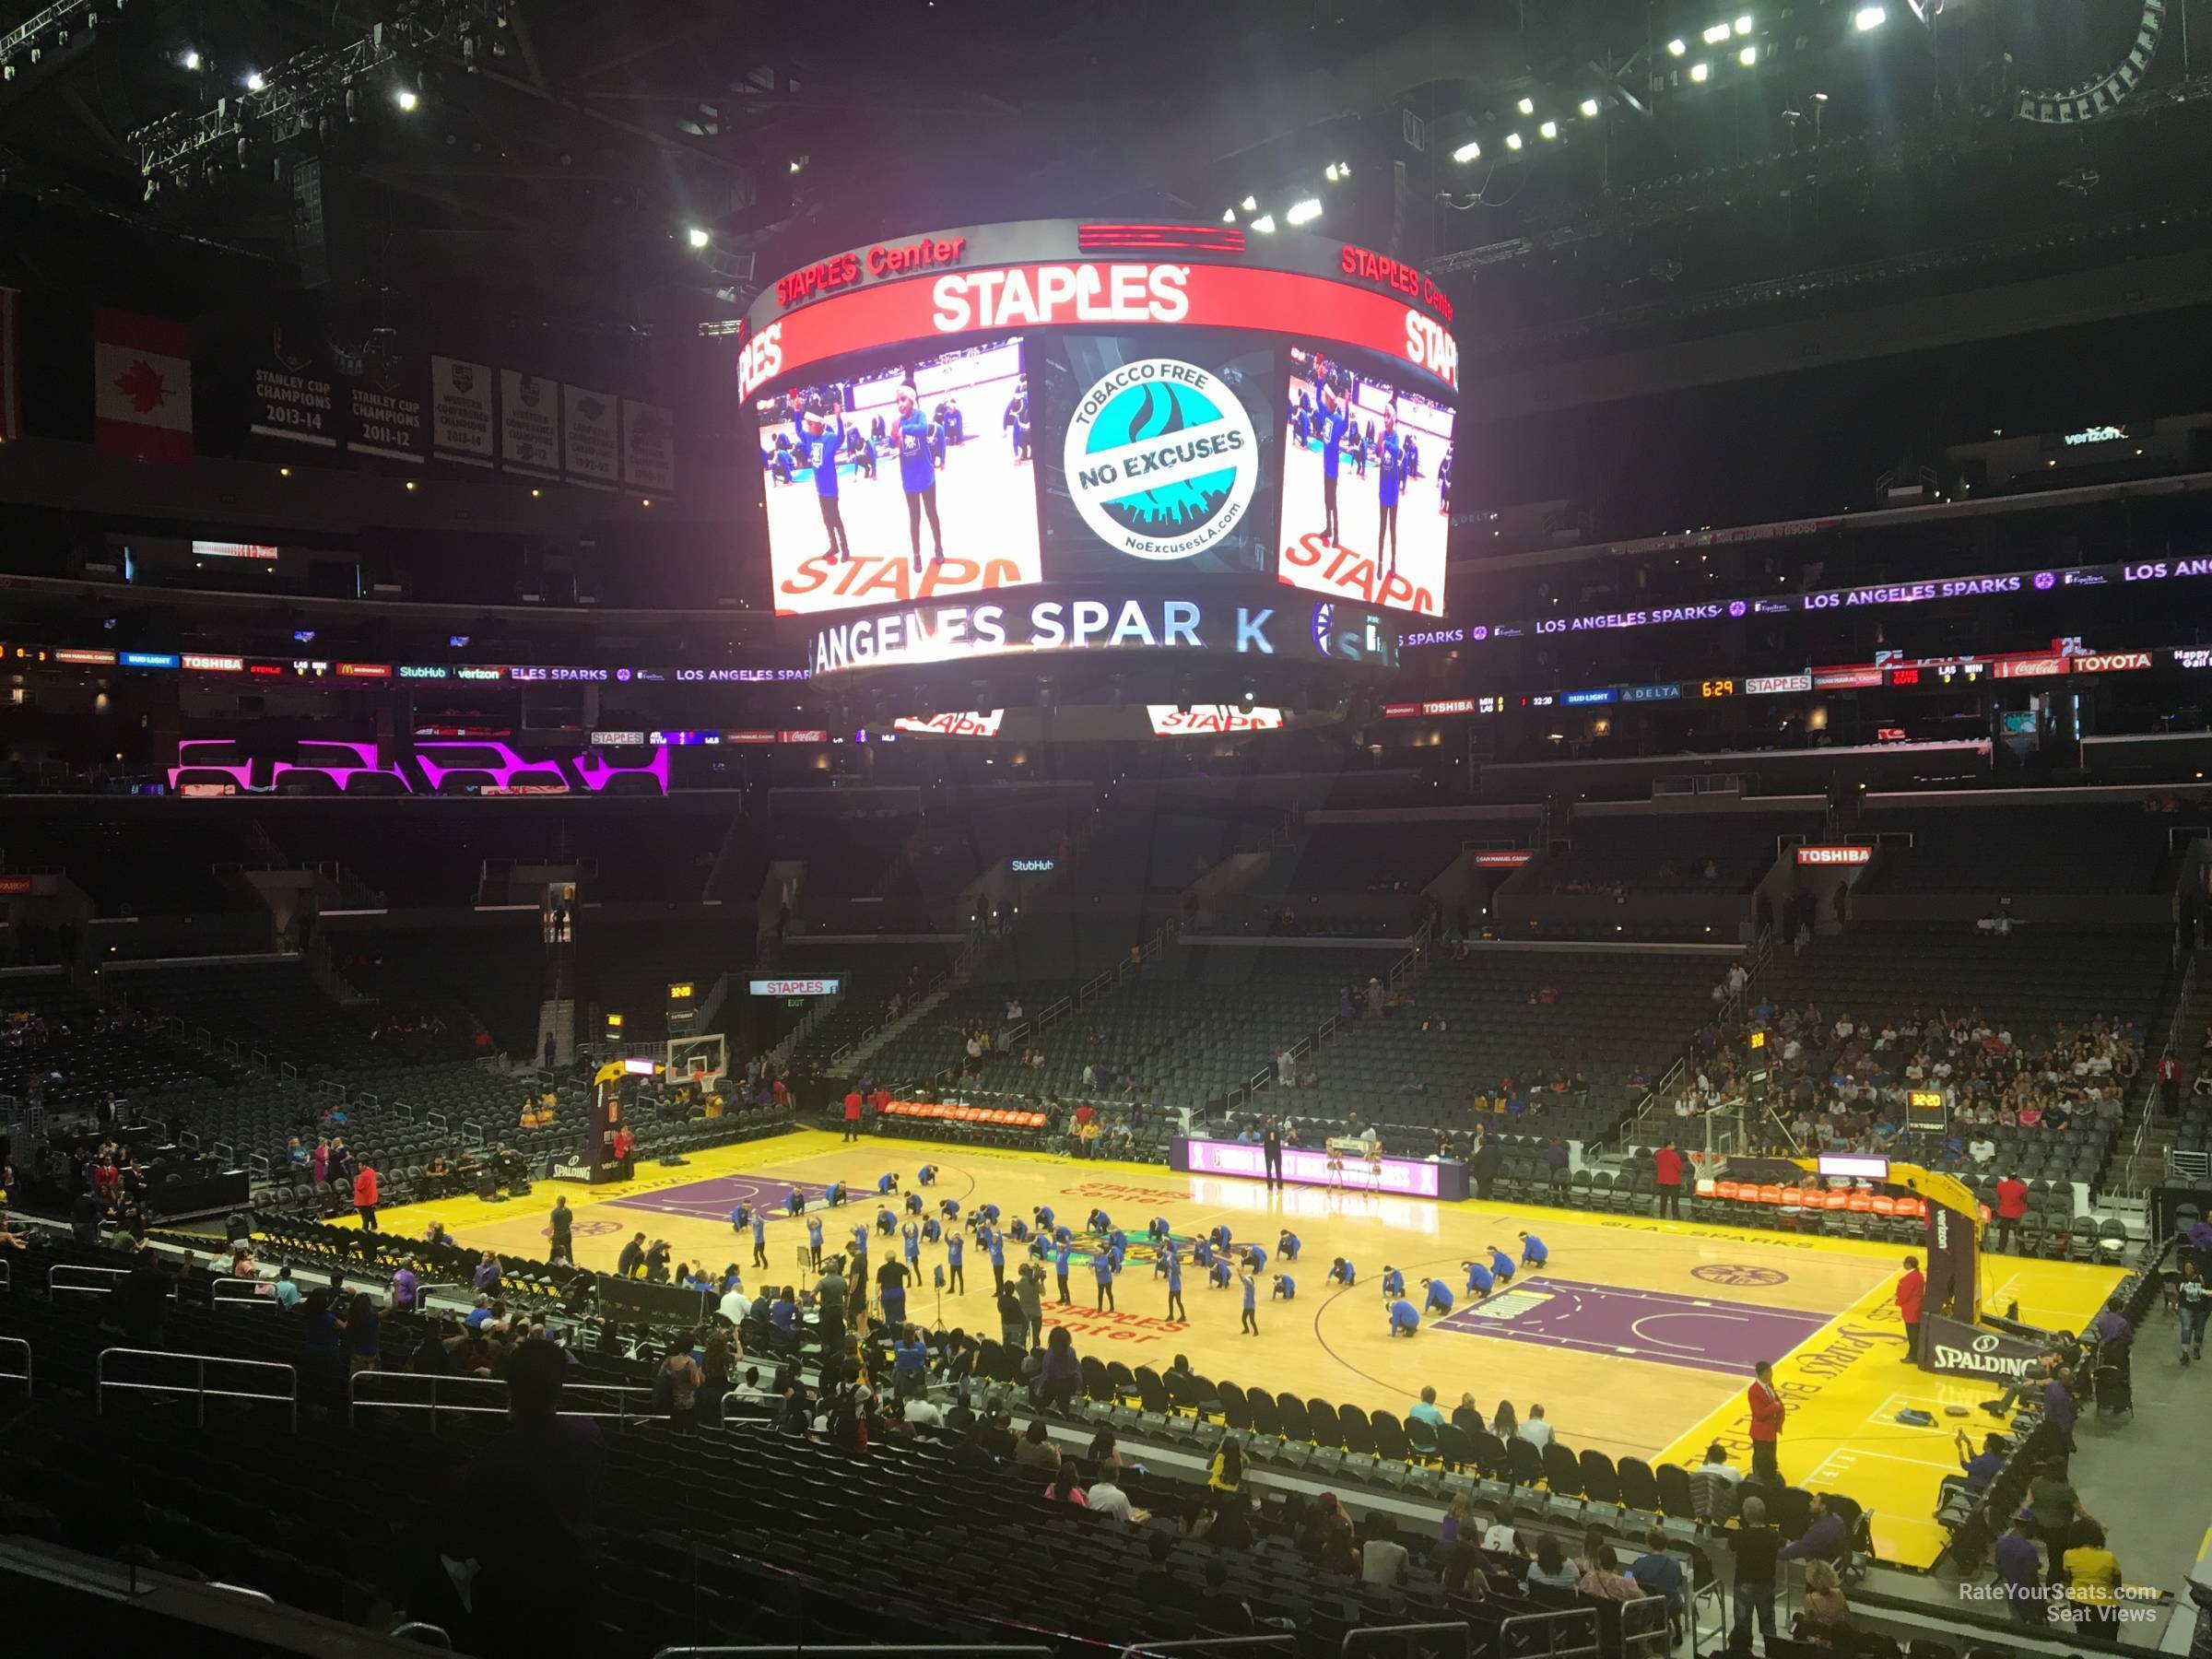 Staples Center Premier 12 - Clippers/Lakers - RateYourSeats.com2400 x 1800